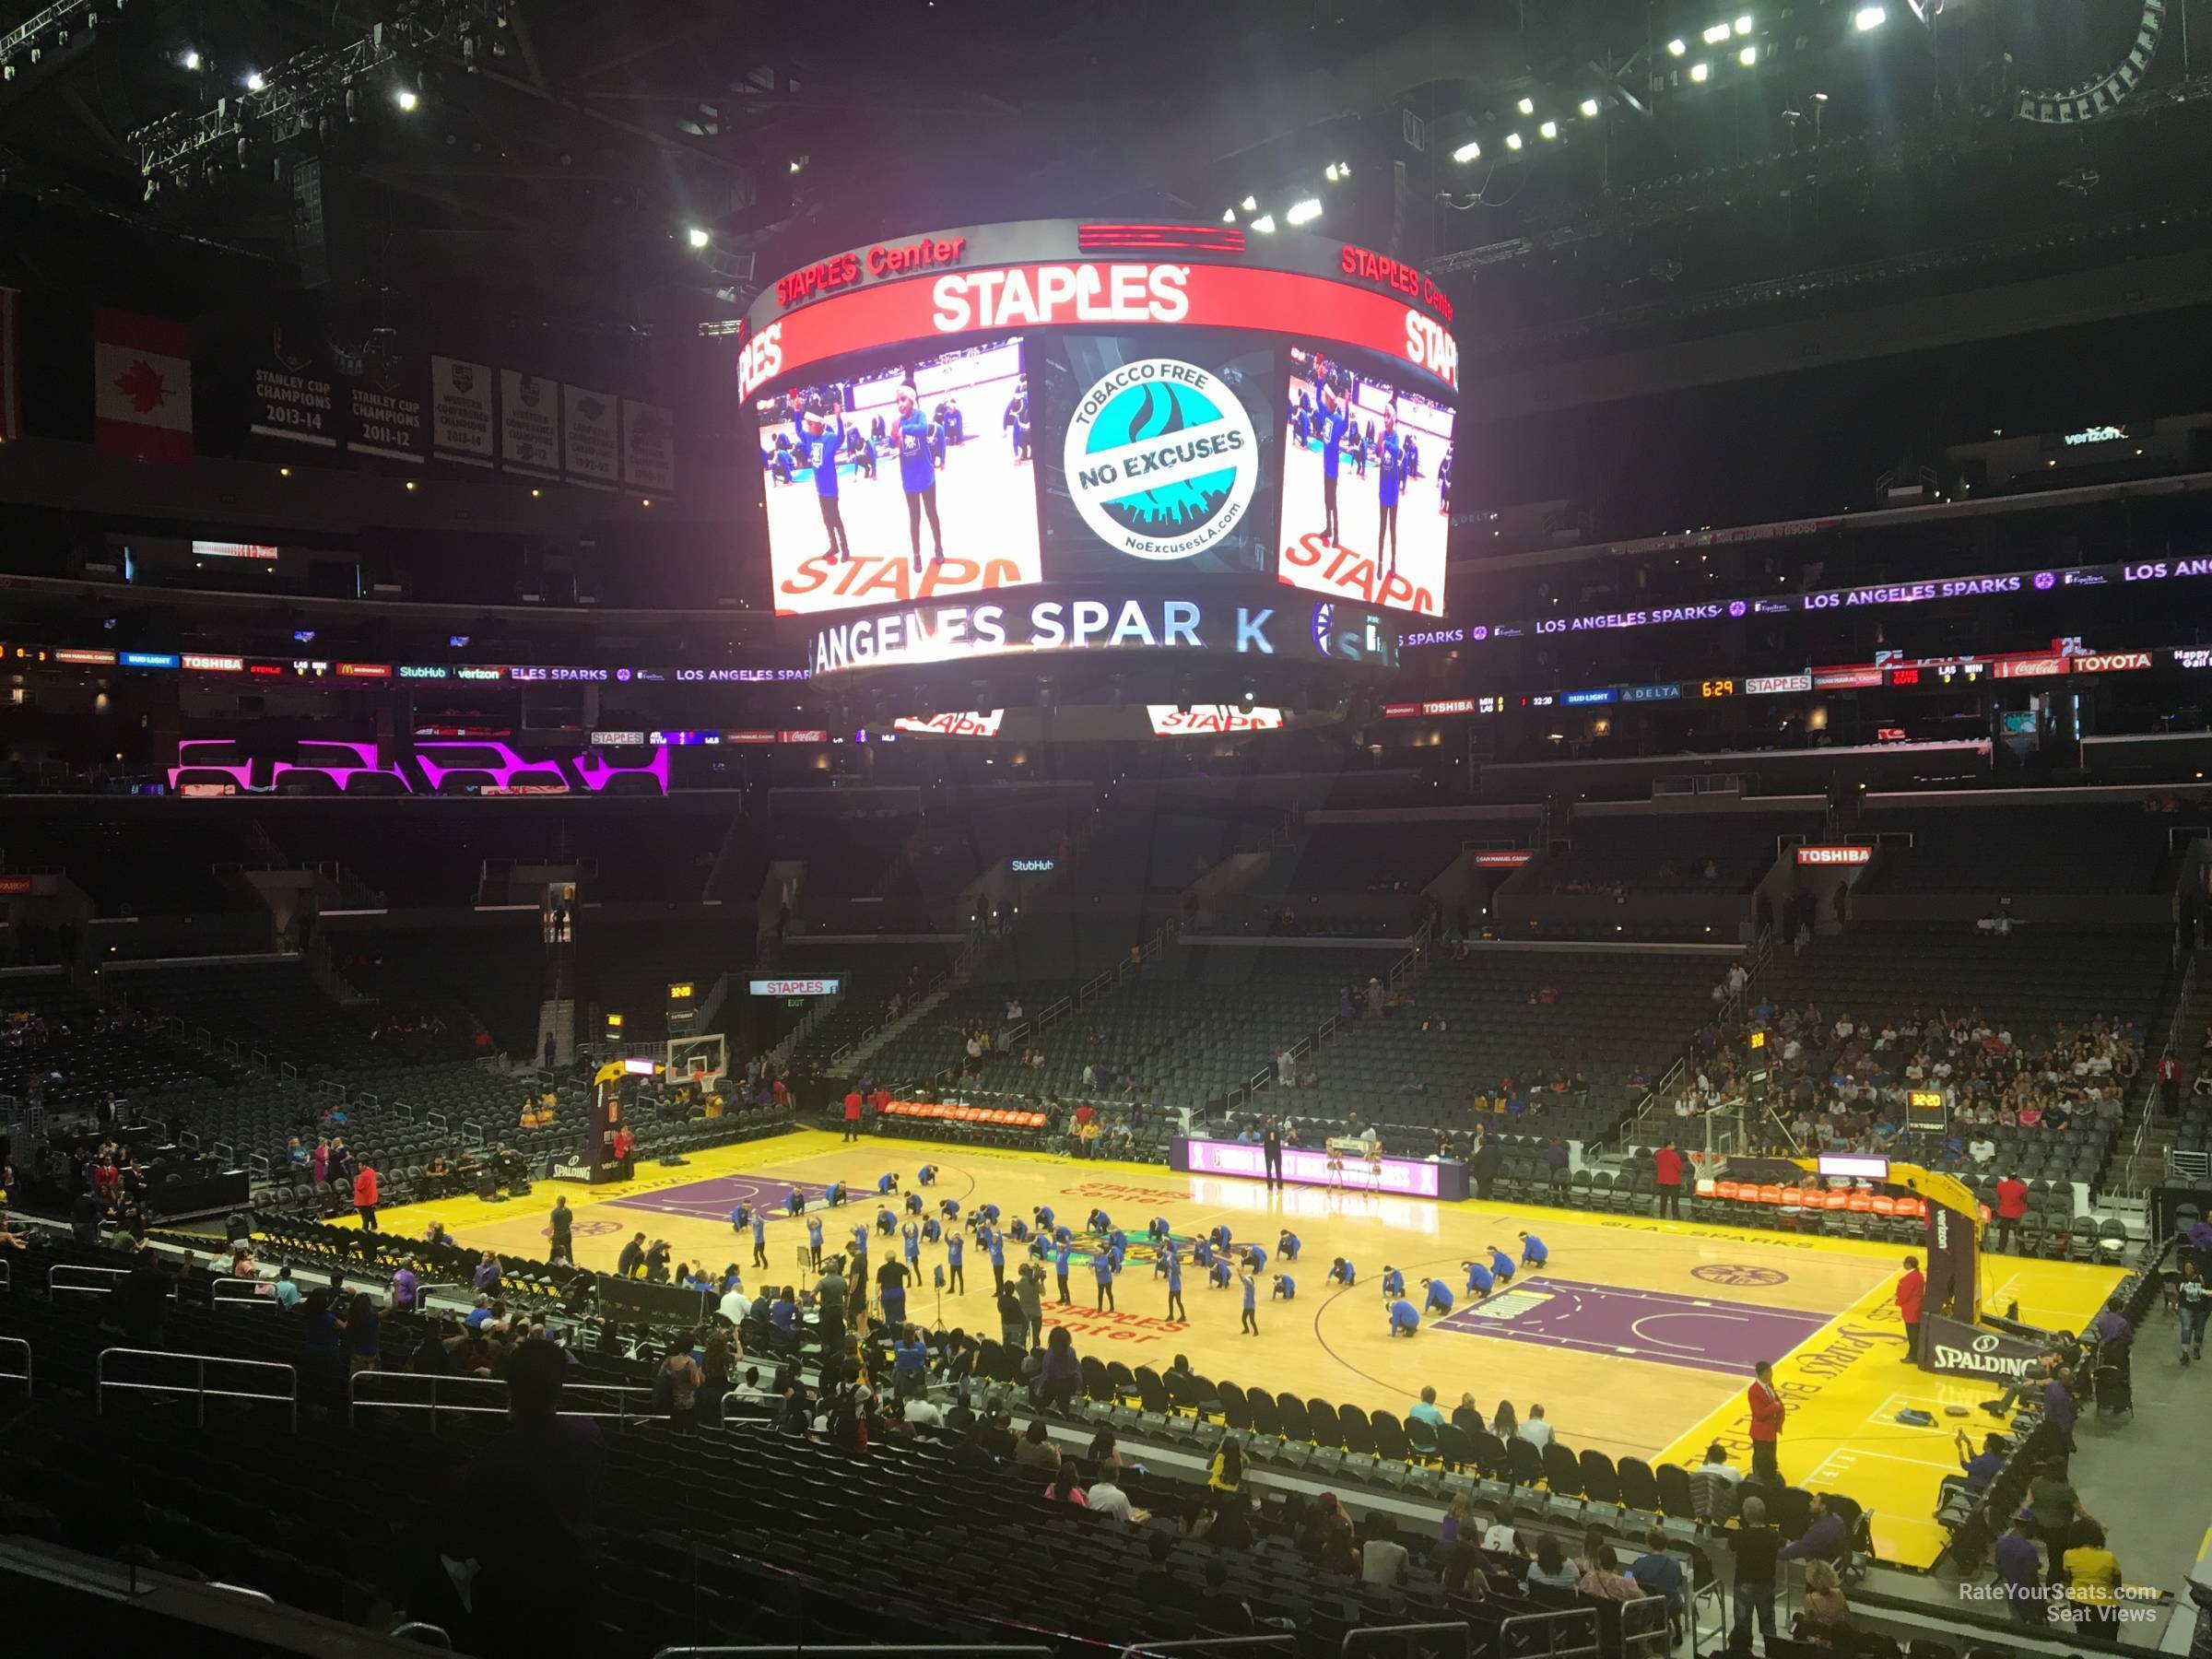 Staples Center Premier 12 - Clippers/Lakers - RateYourSeats.com2400 x 1800